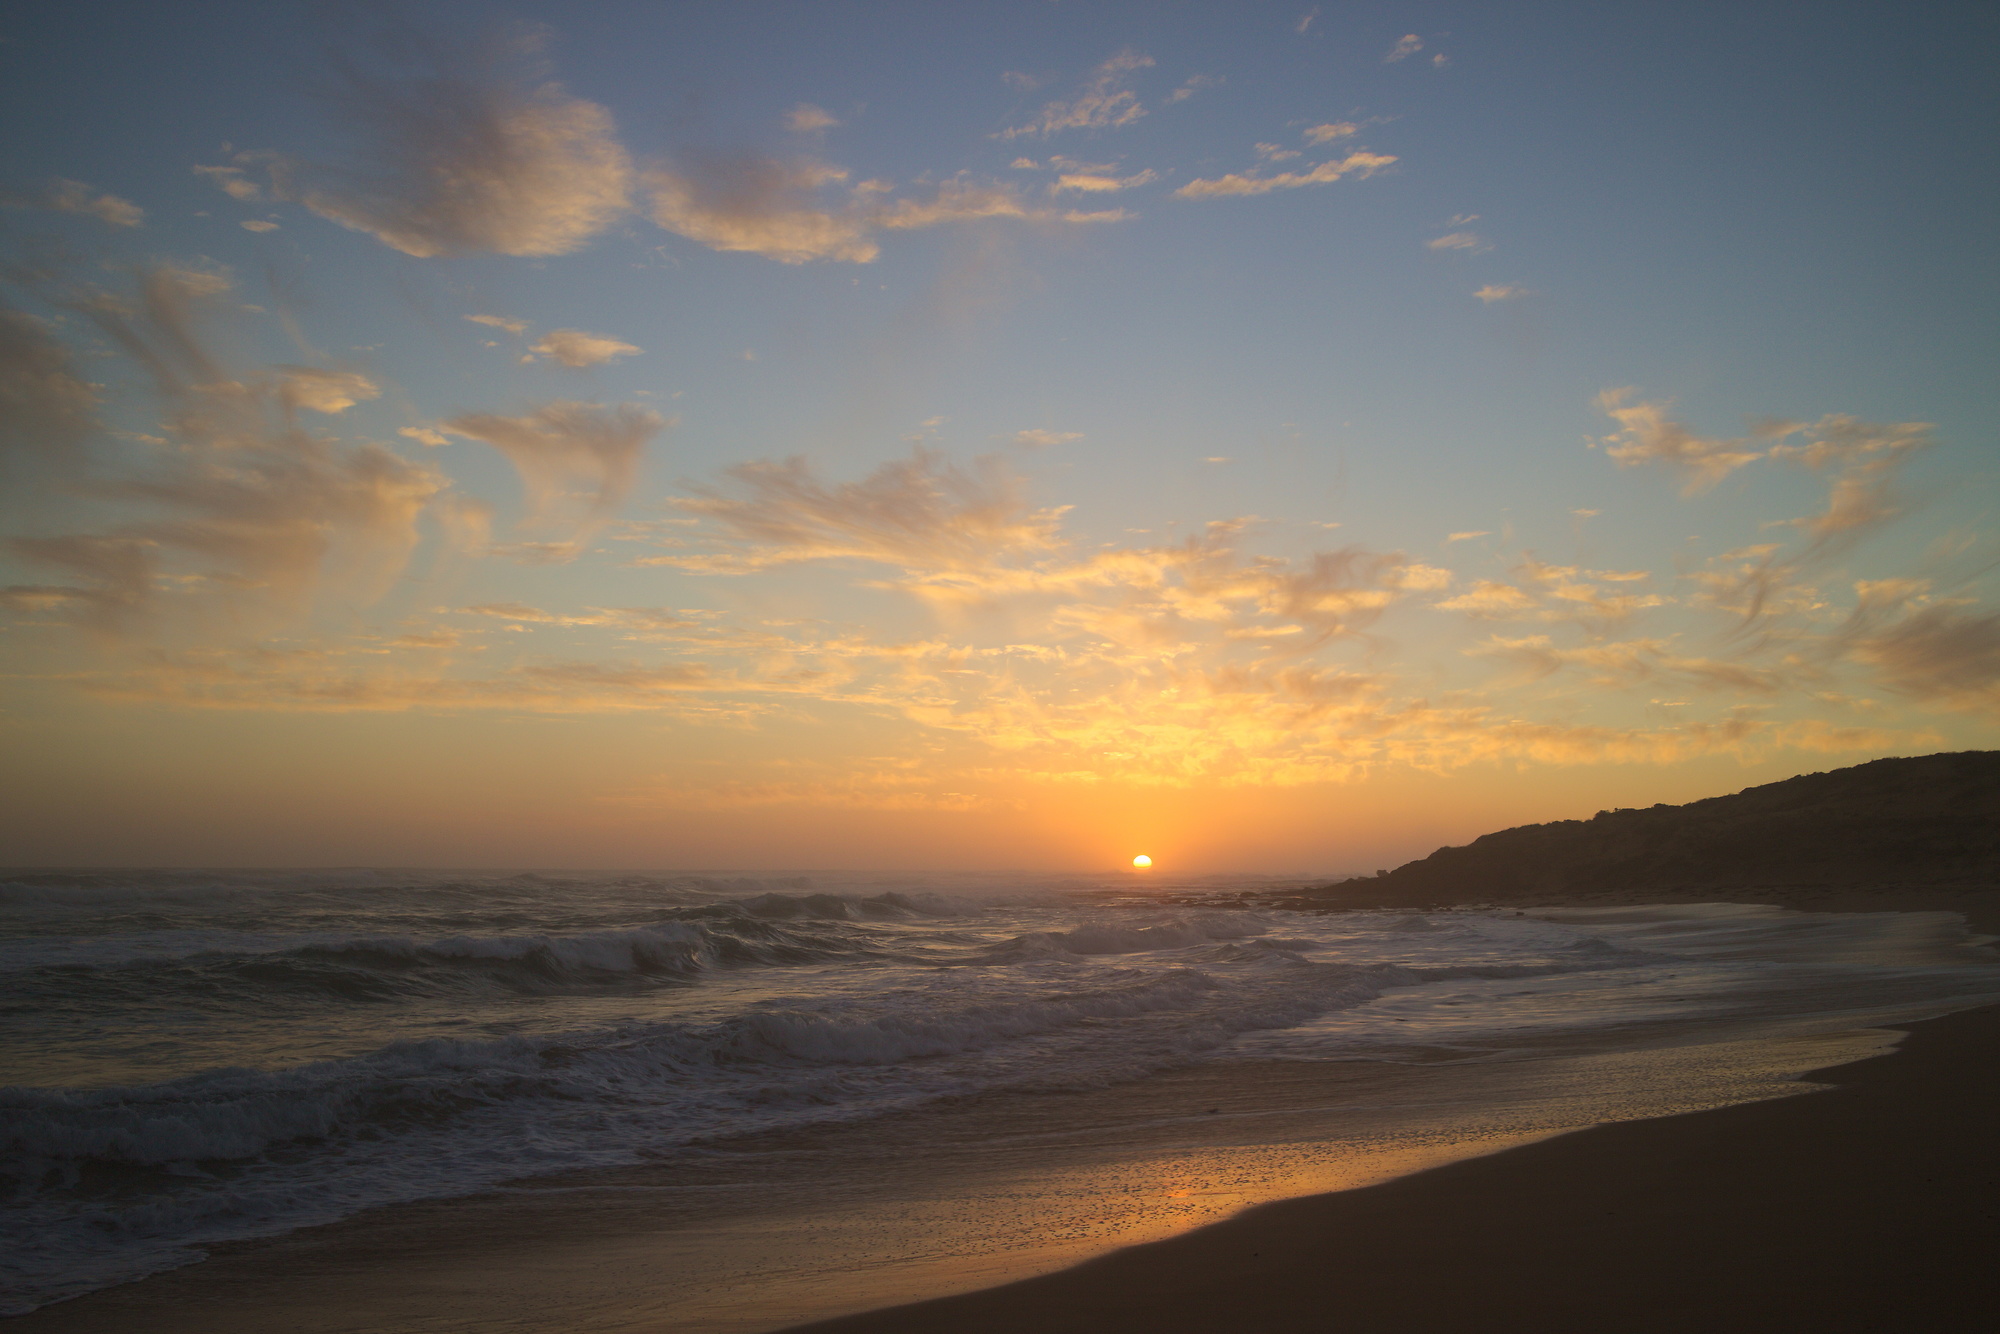 Sunset on the beach at Merri Marine Sanctuary, Warrnambool

#victoria #australia